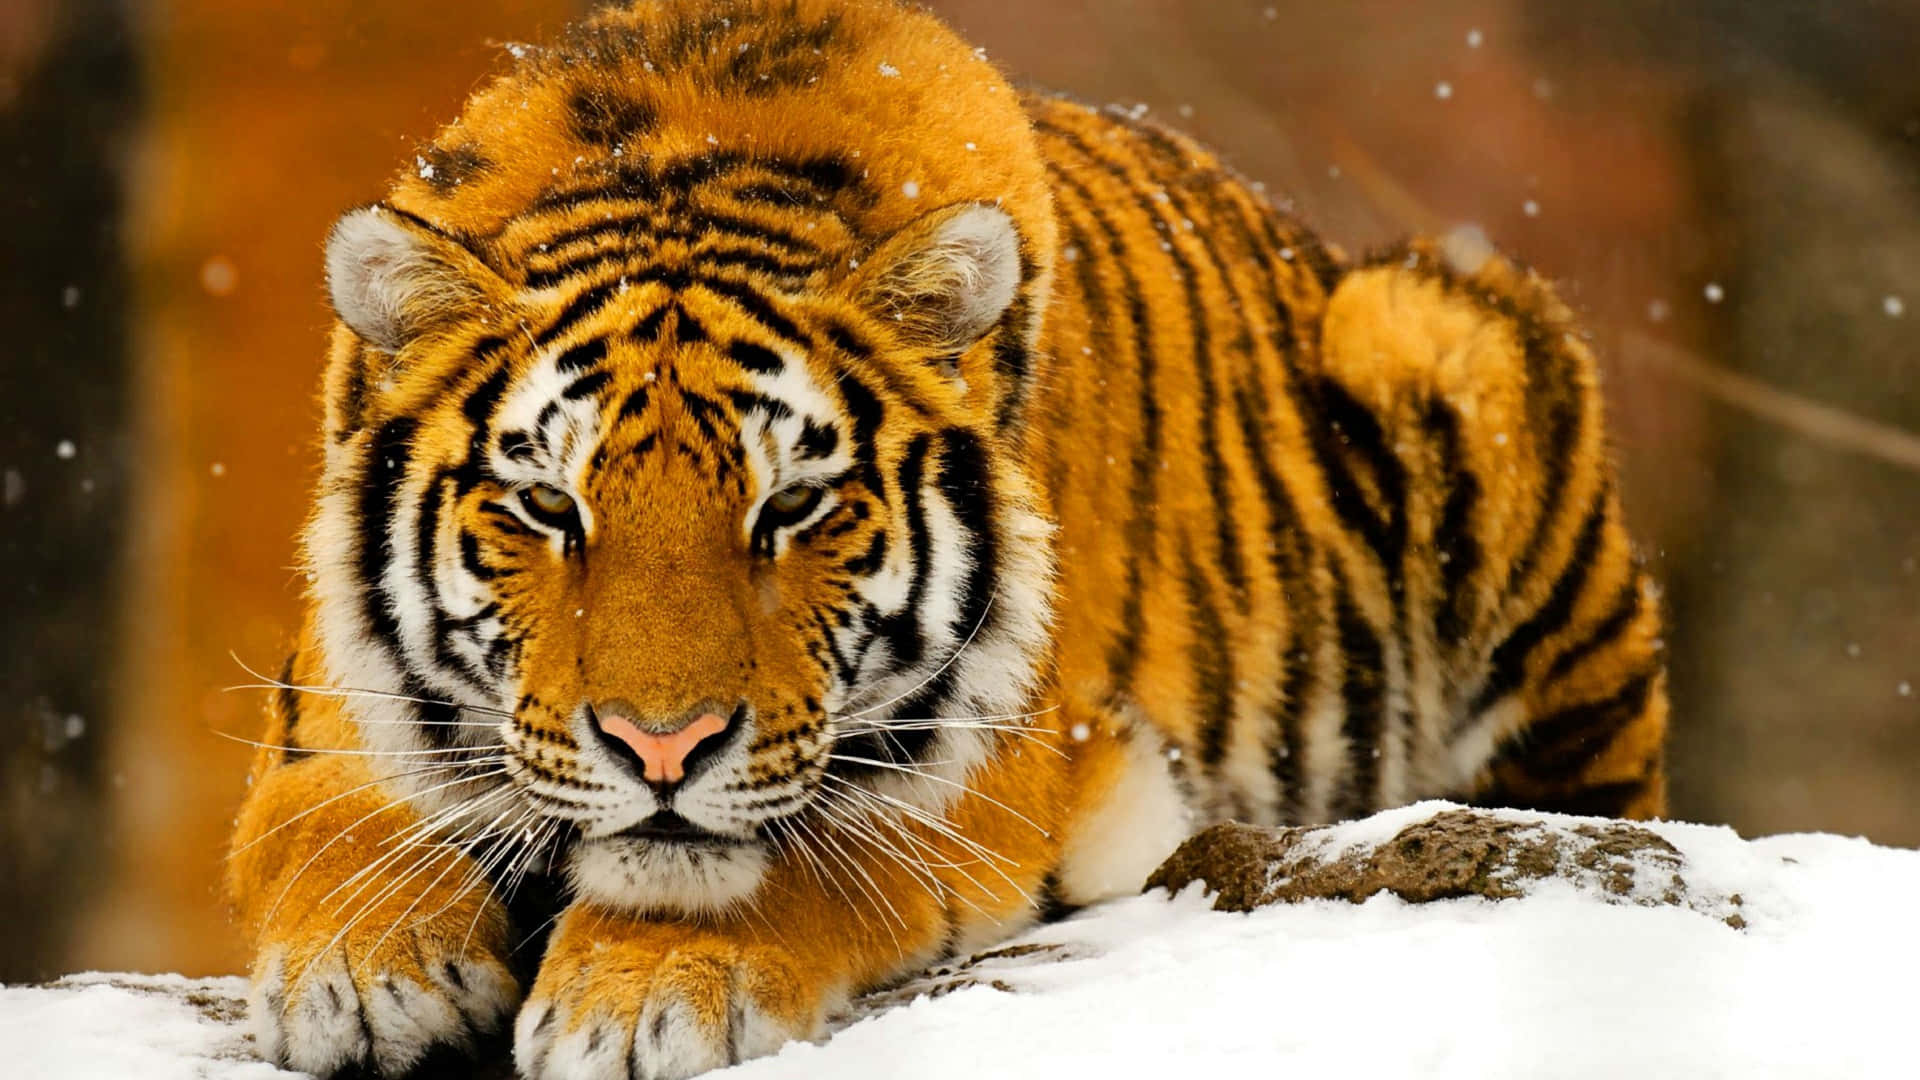 Majestic Wildlife - Splendid 4k Close-up Of A Tiger Wallpaper